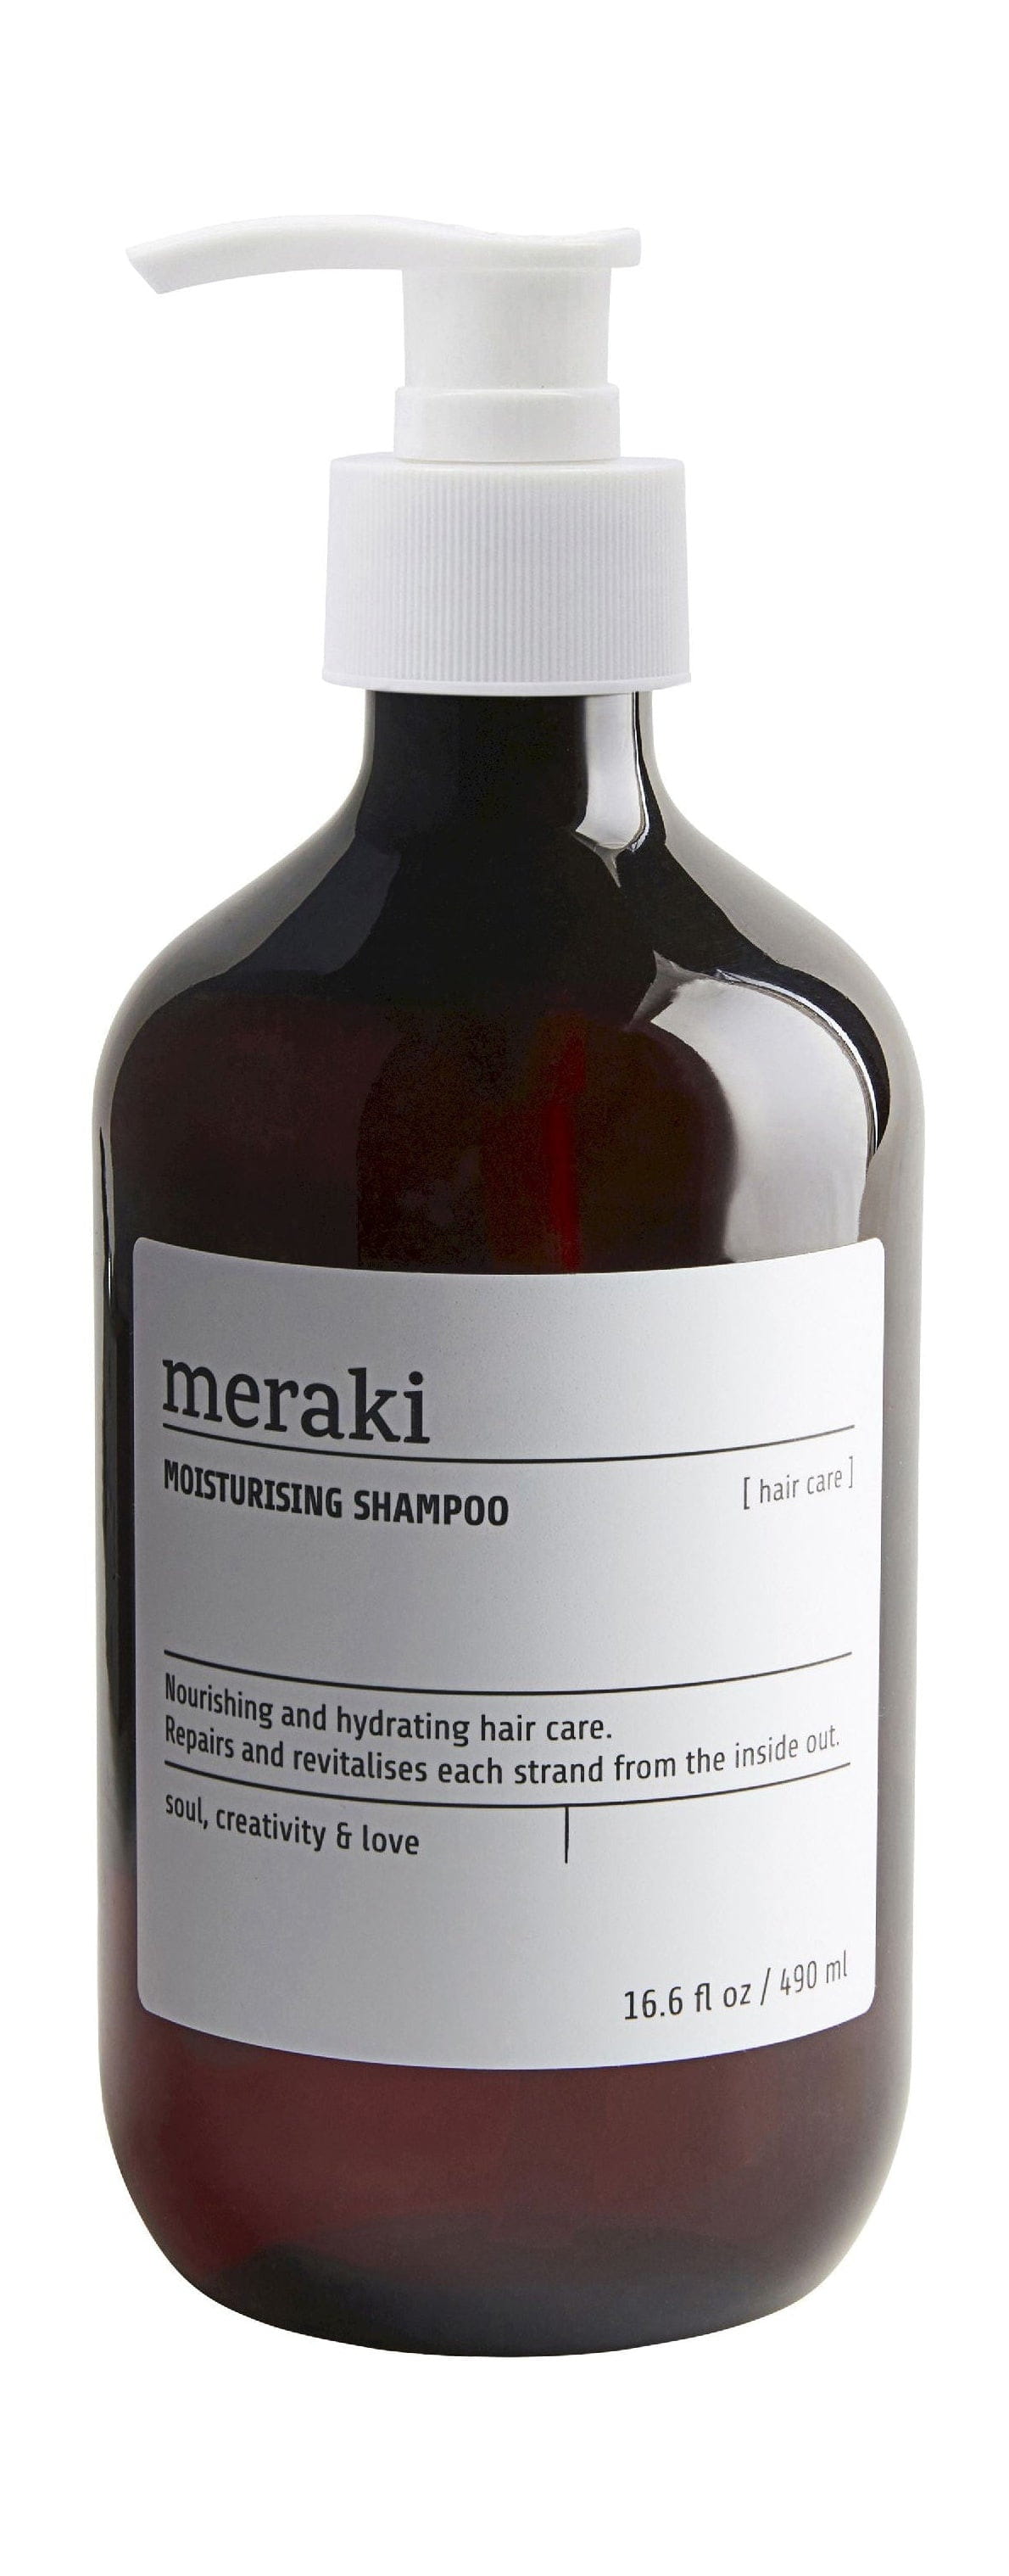 Meraki Moisturizing Shampoo 490 ml